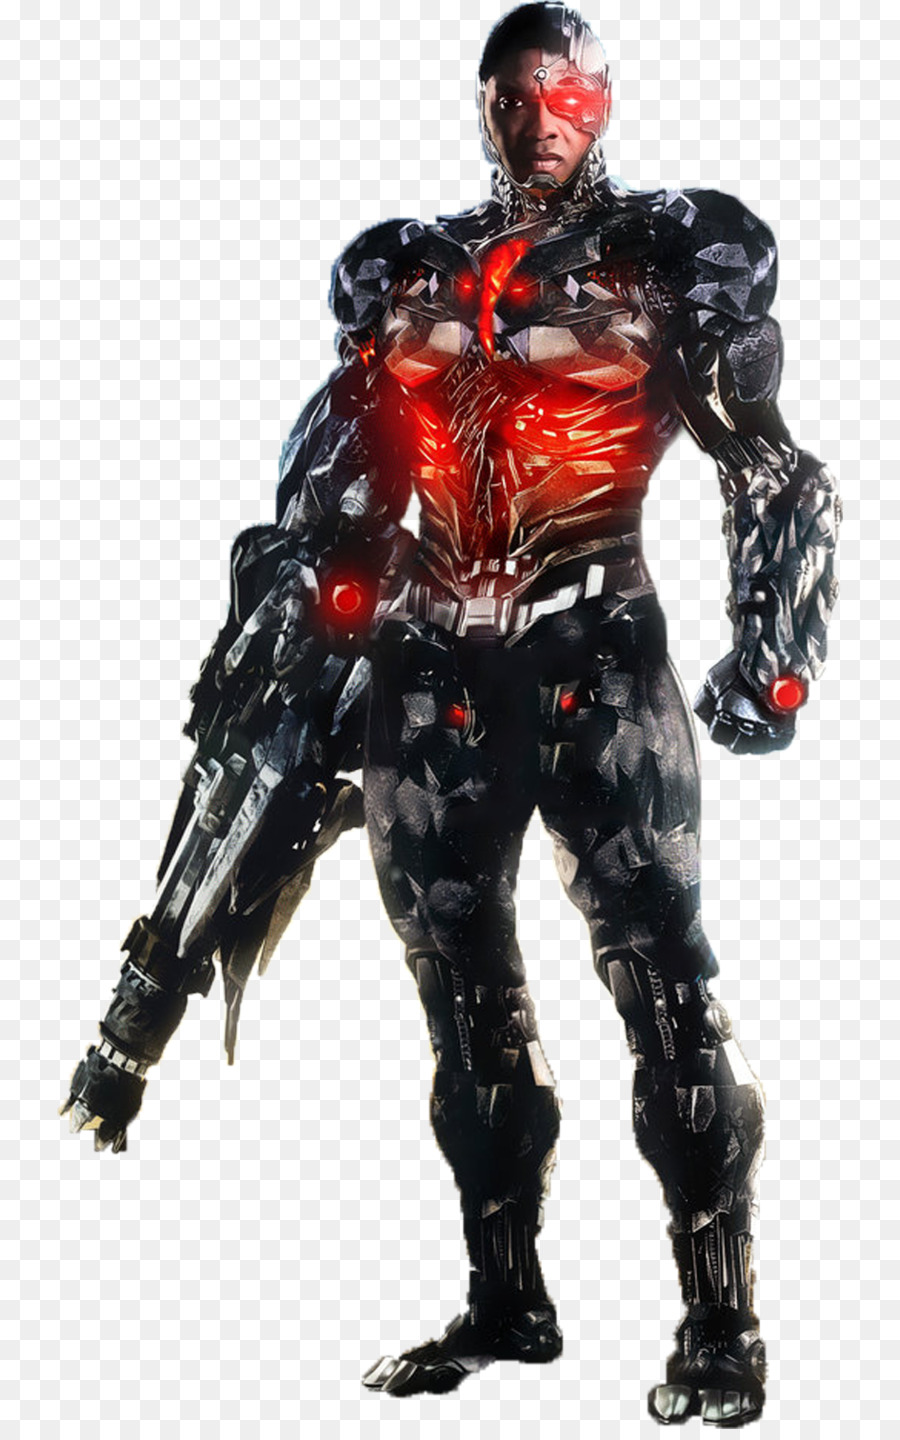 Cyborg DC Extended Universe Film Grid - Cyborg png download - 945*1500 - Free Transparent Cyborg png Download.